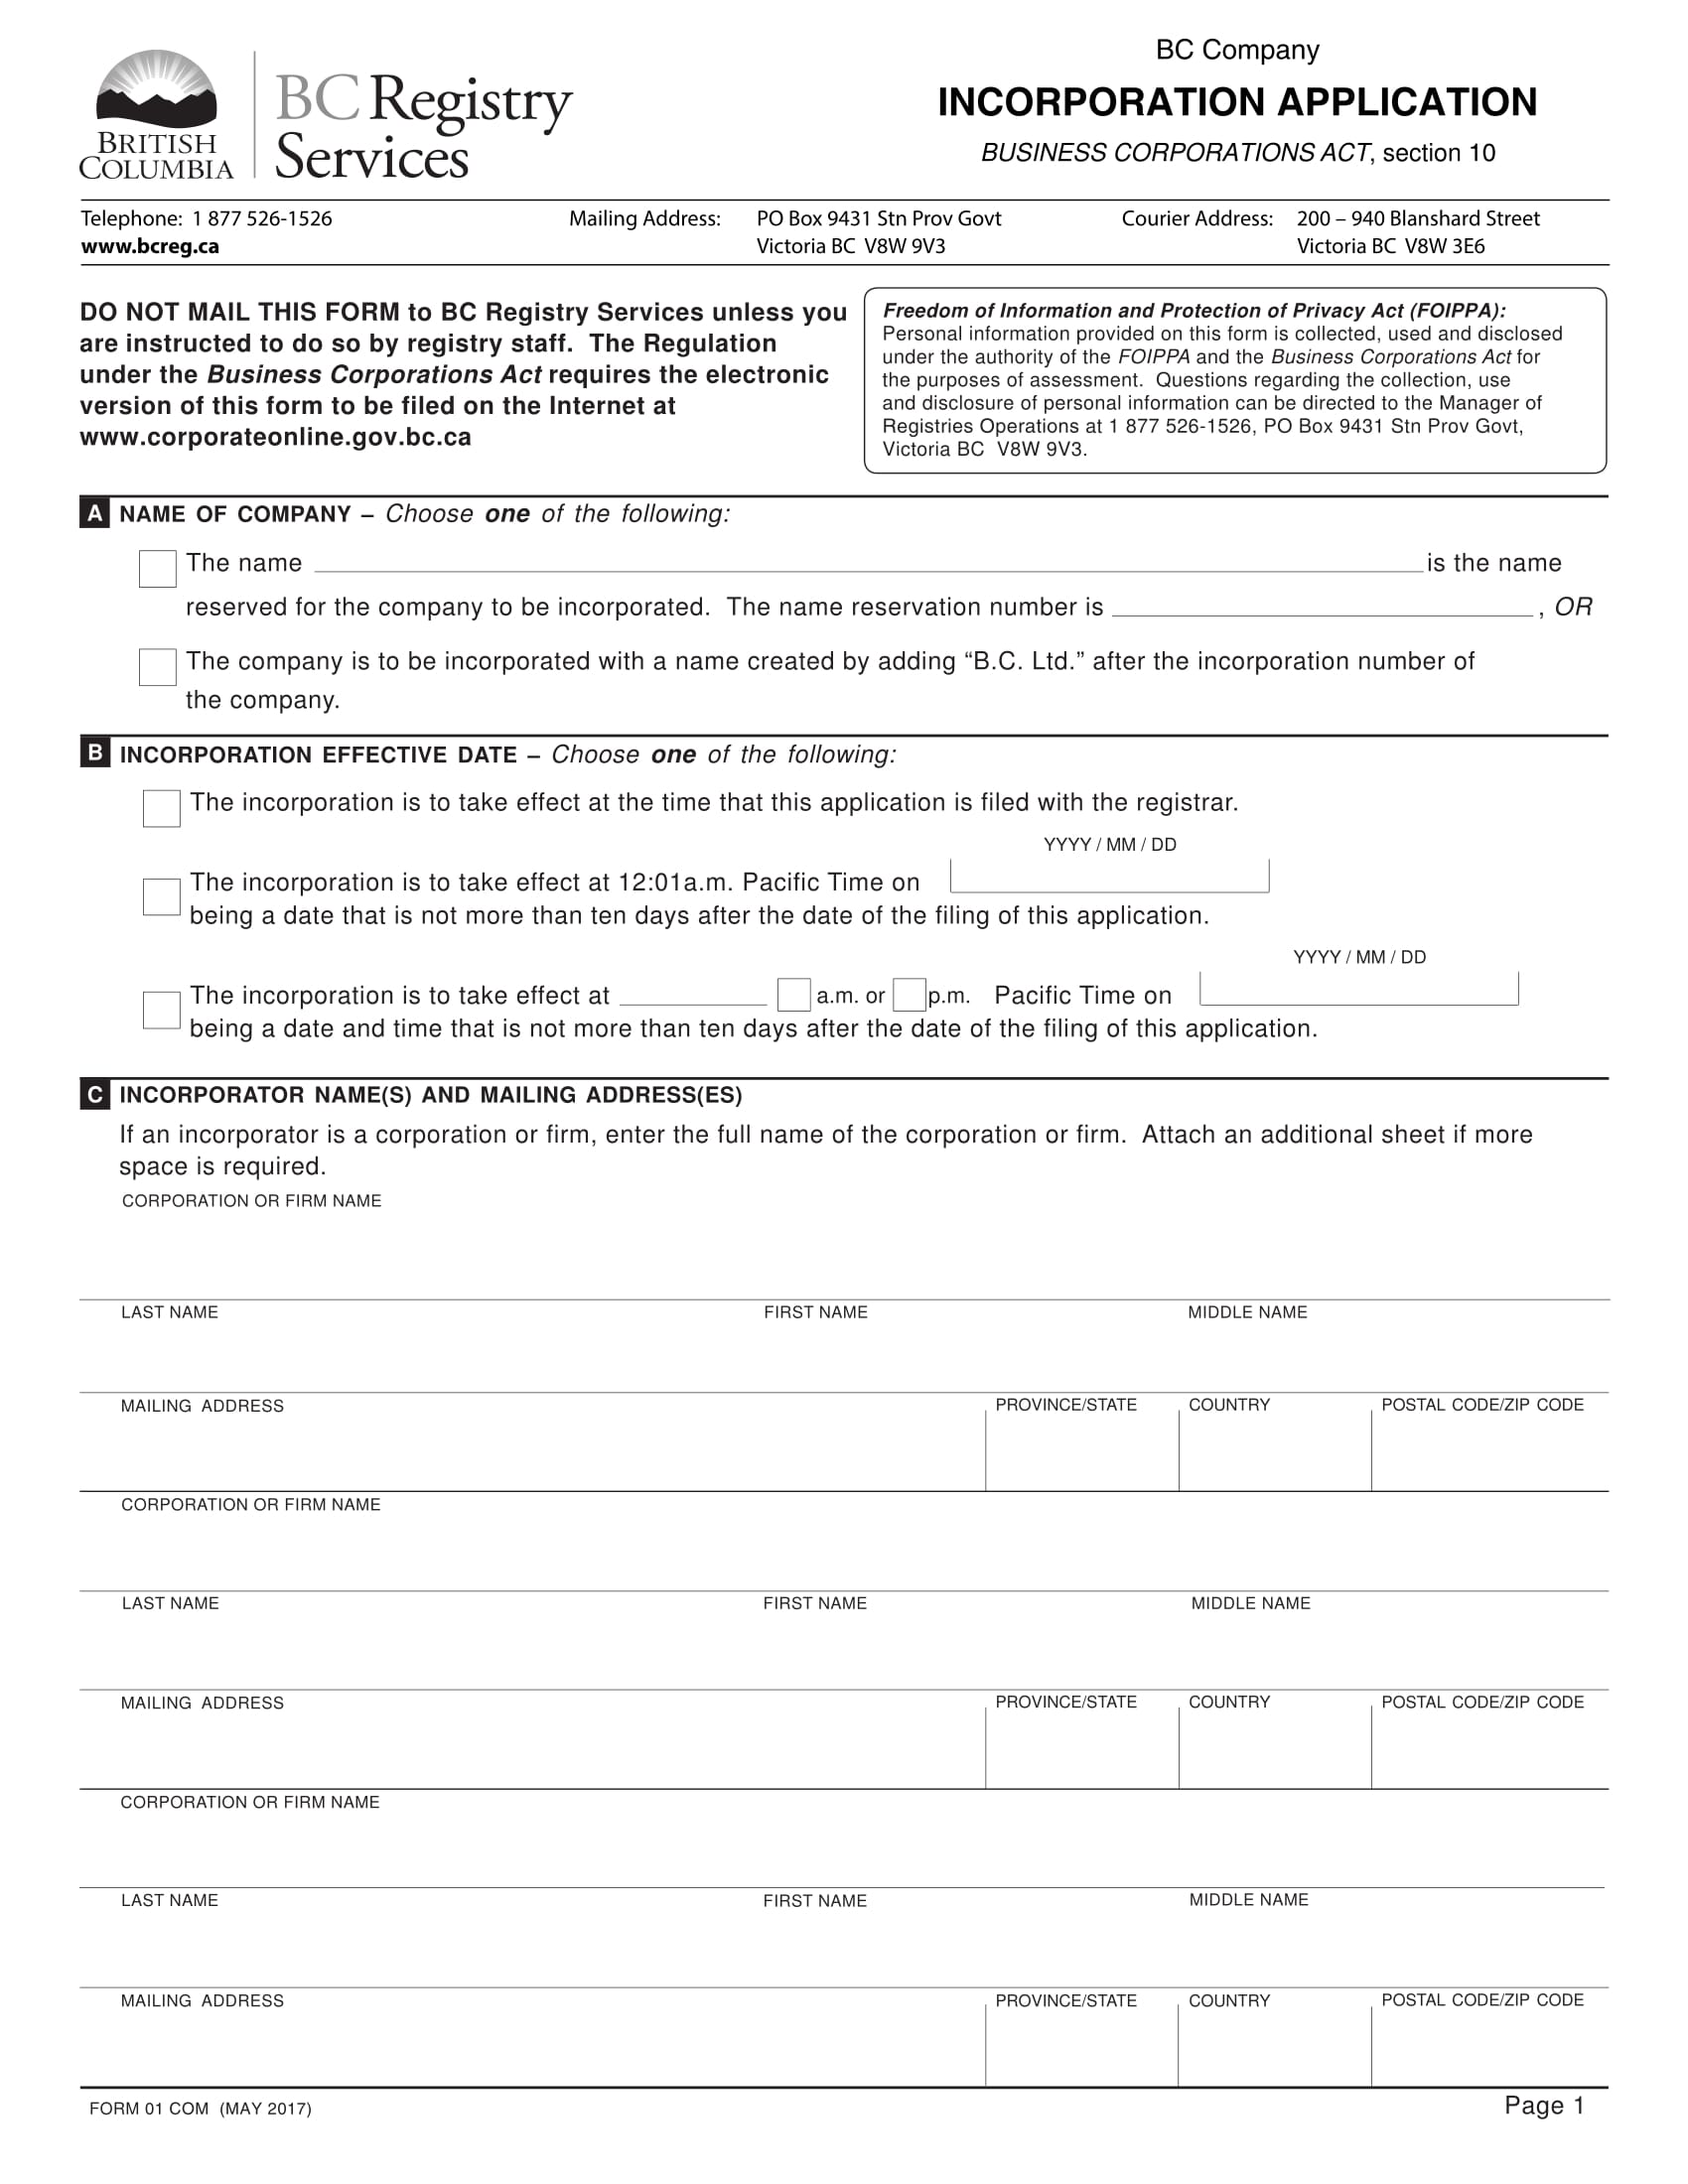 incorporation application form 1